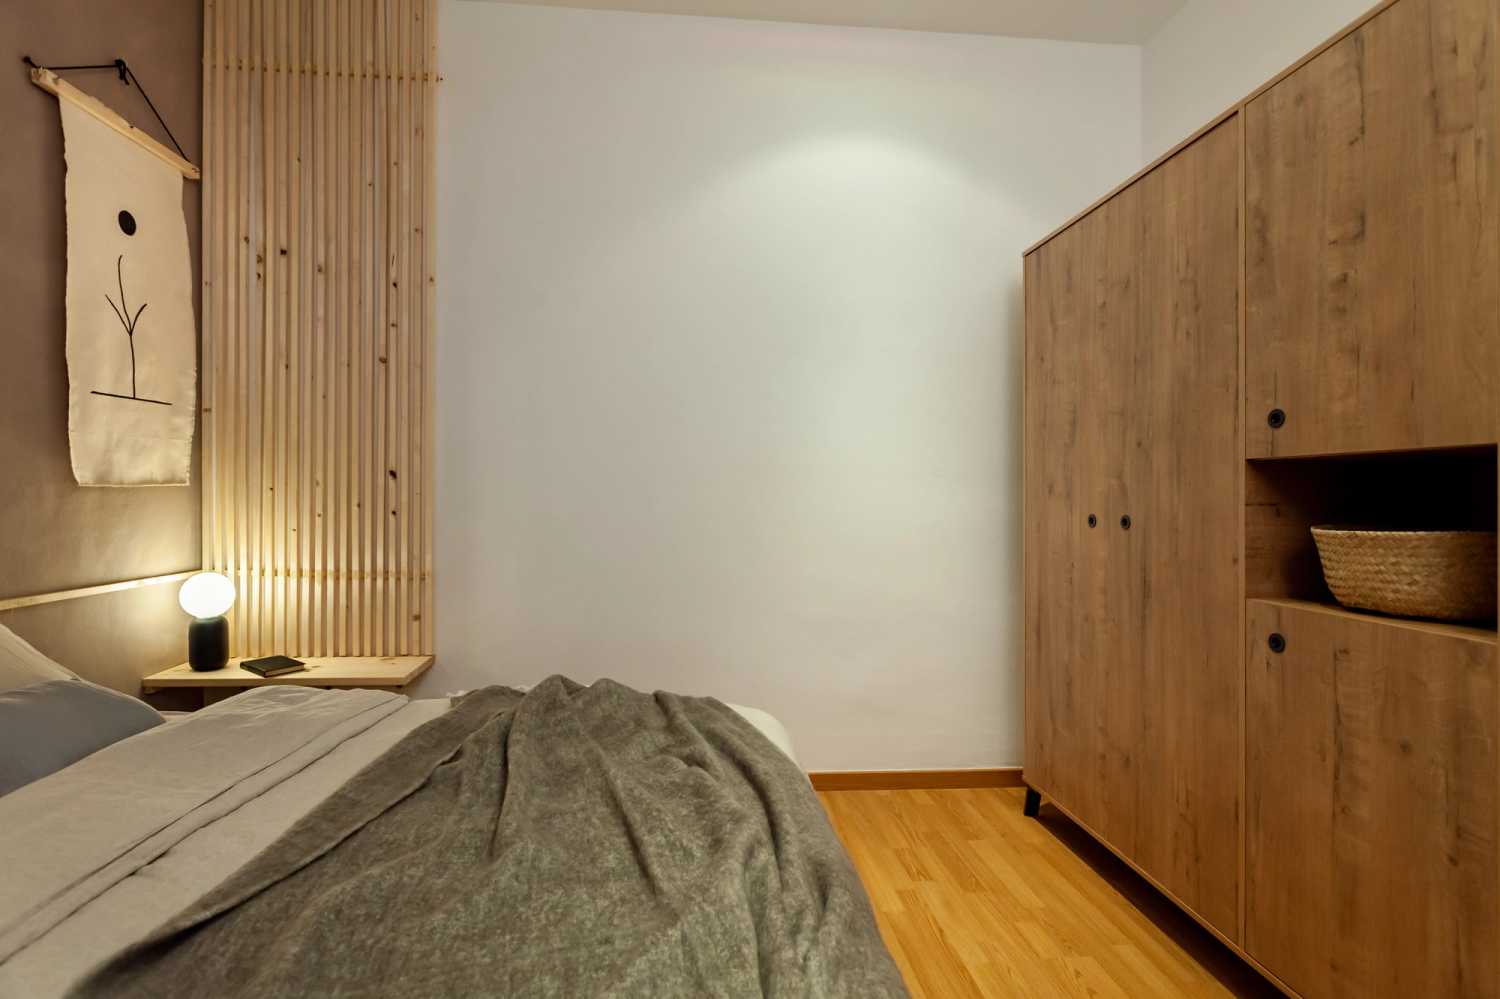 1653911789-ukio-barcelona-diagonal-bedroom-with-wood-wardrobe.jpg